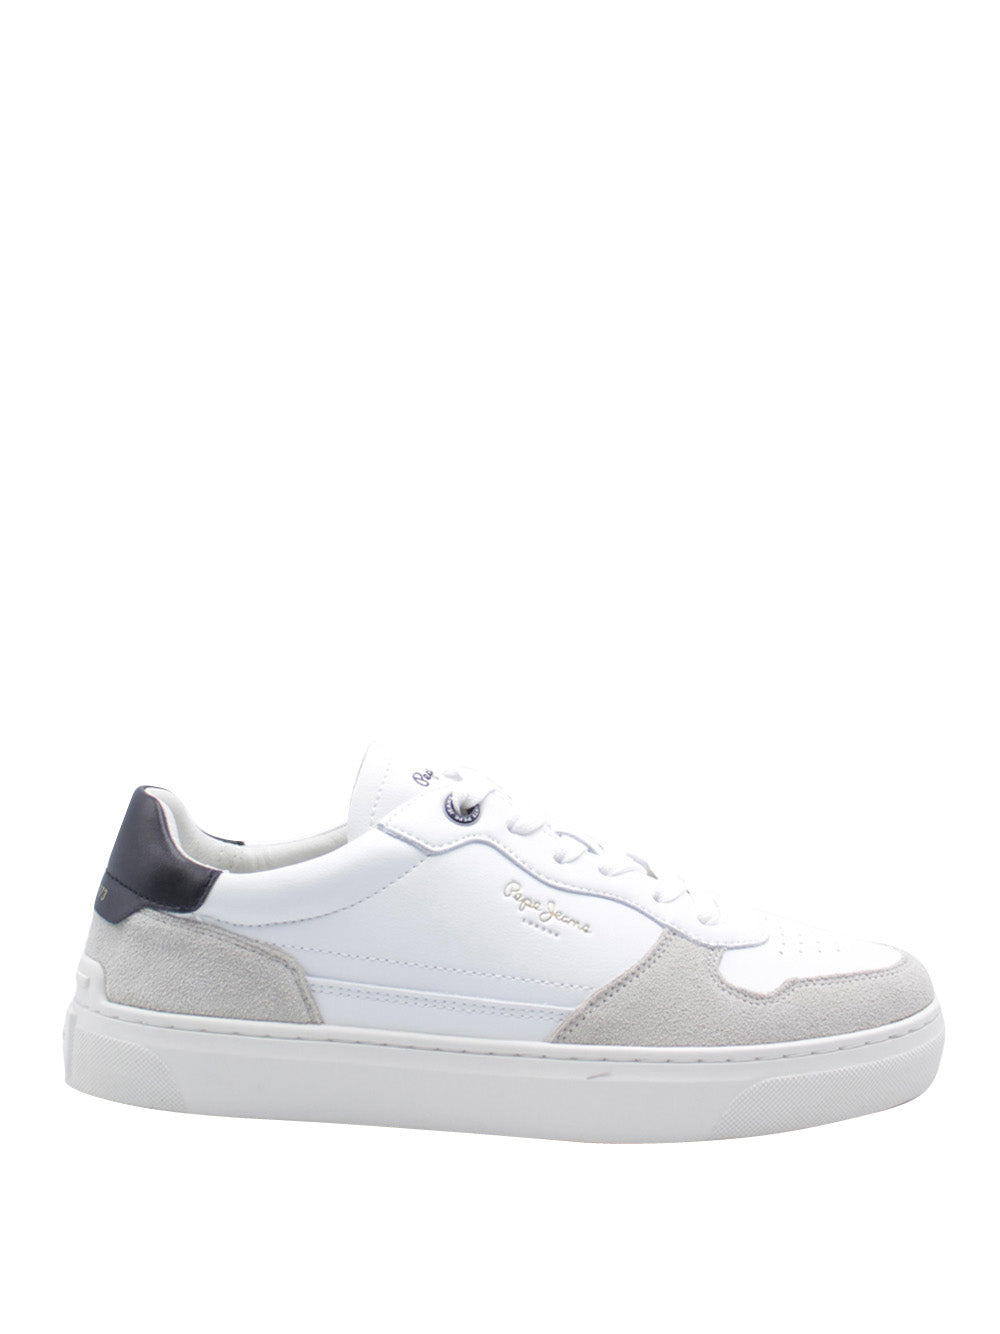 PEPE JEANS Sneakers Uomo - Bianco modello PMS00008